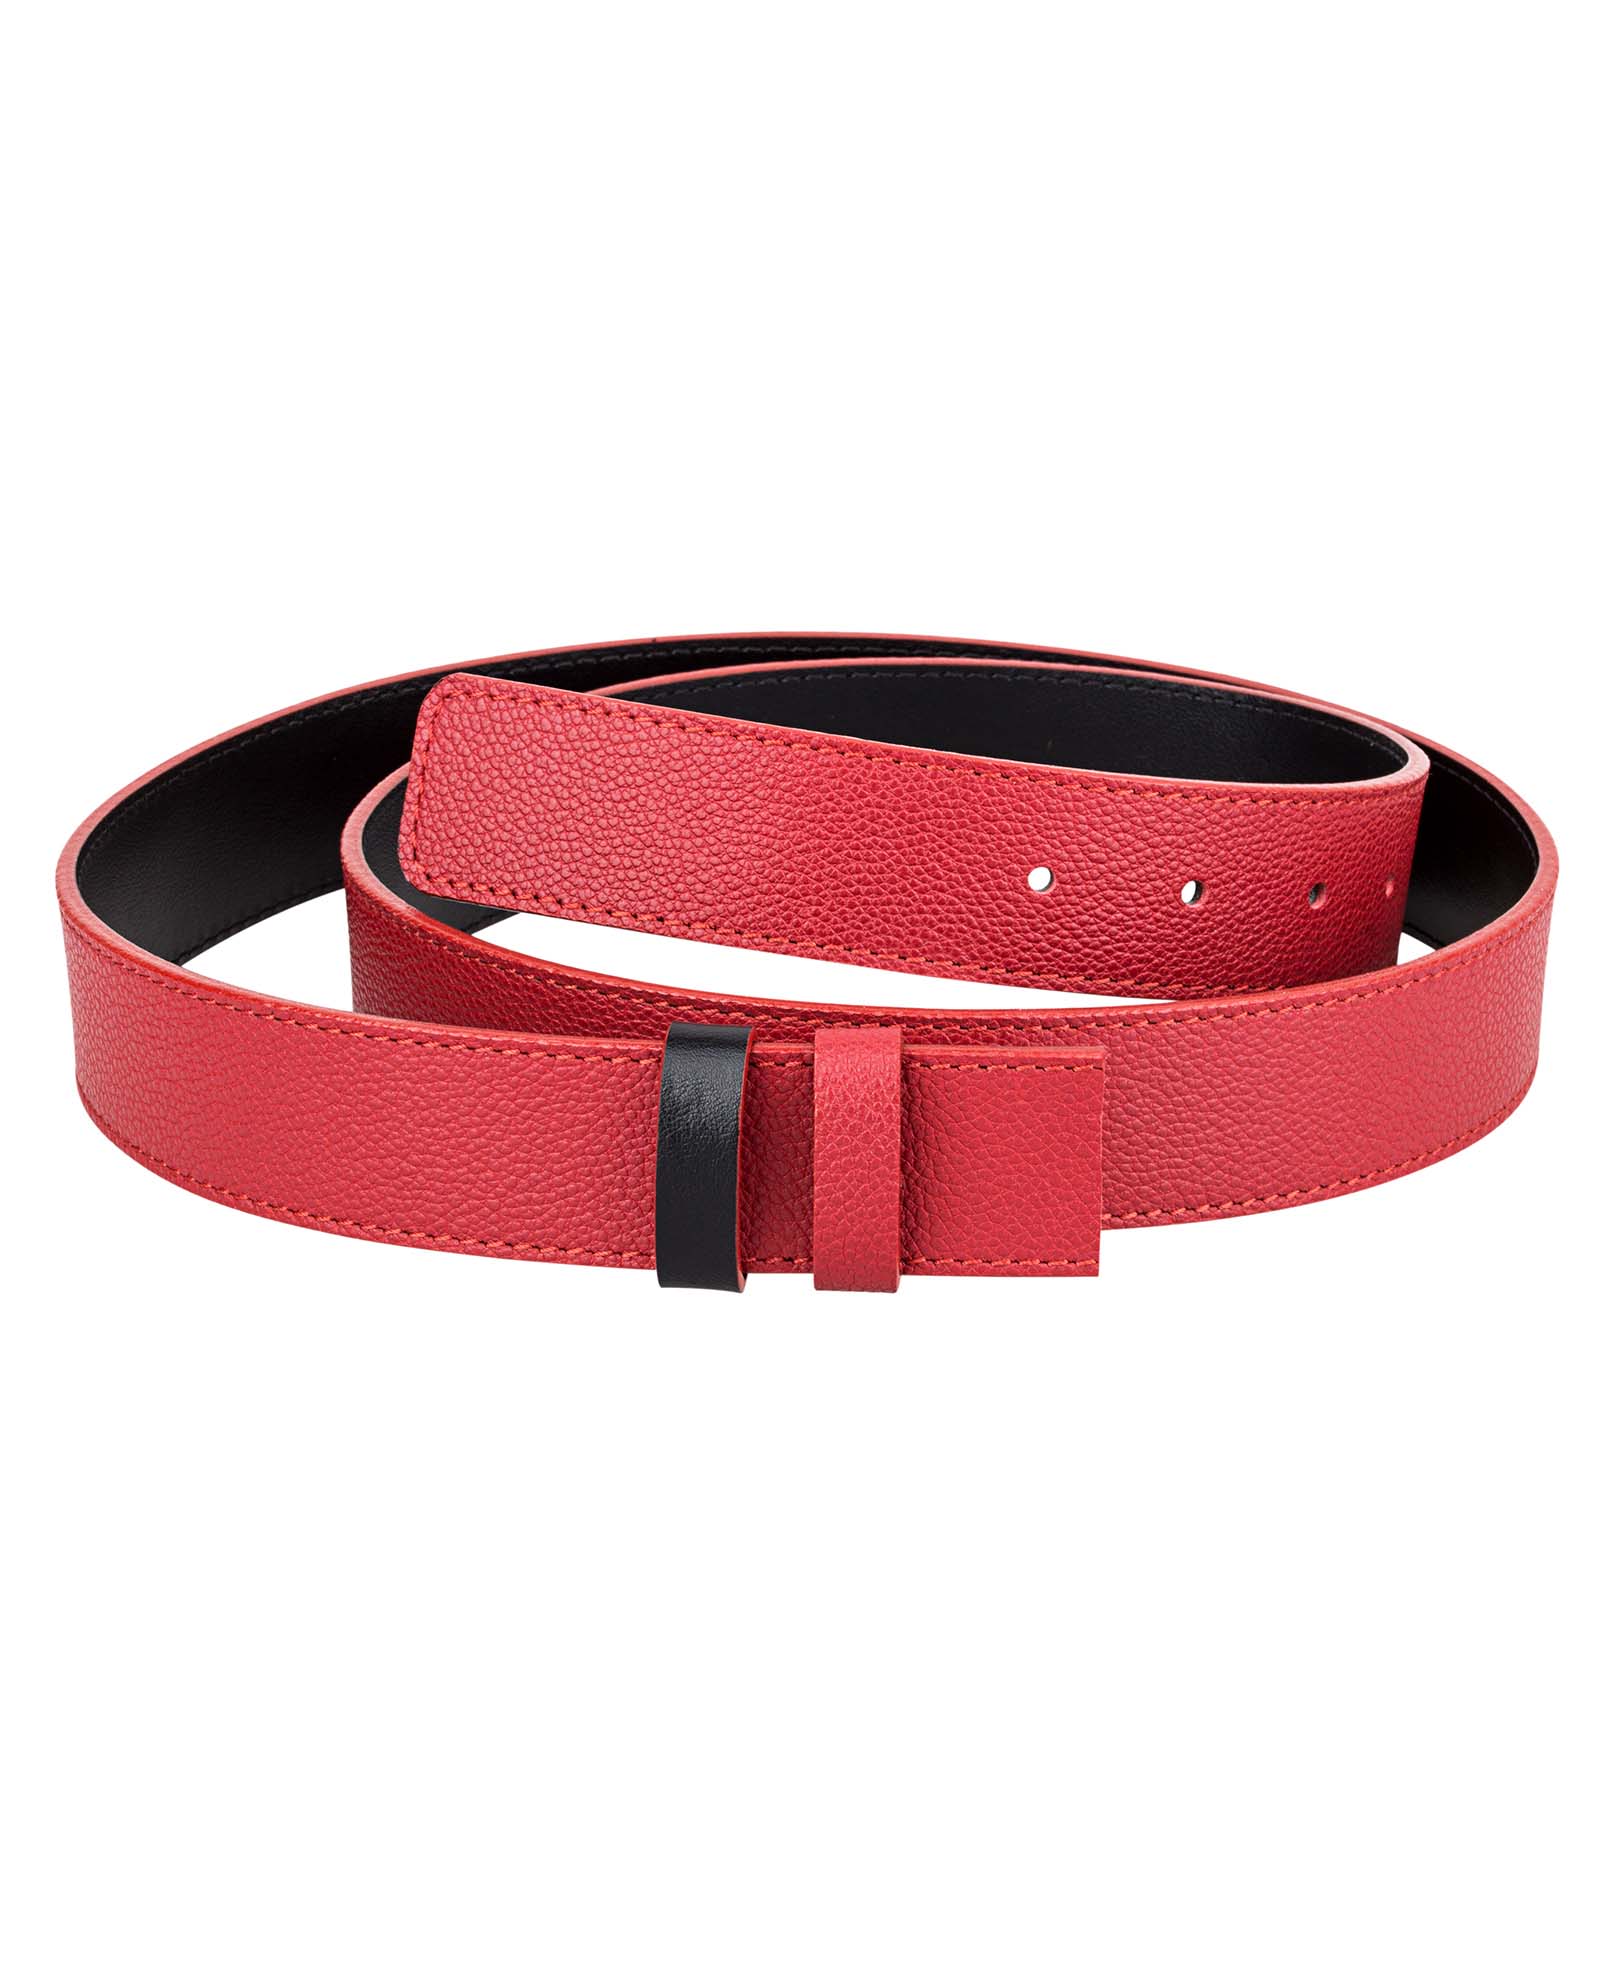 Buy Reversible Red Leather Belt Strap - Capo Pelle